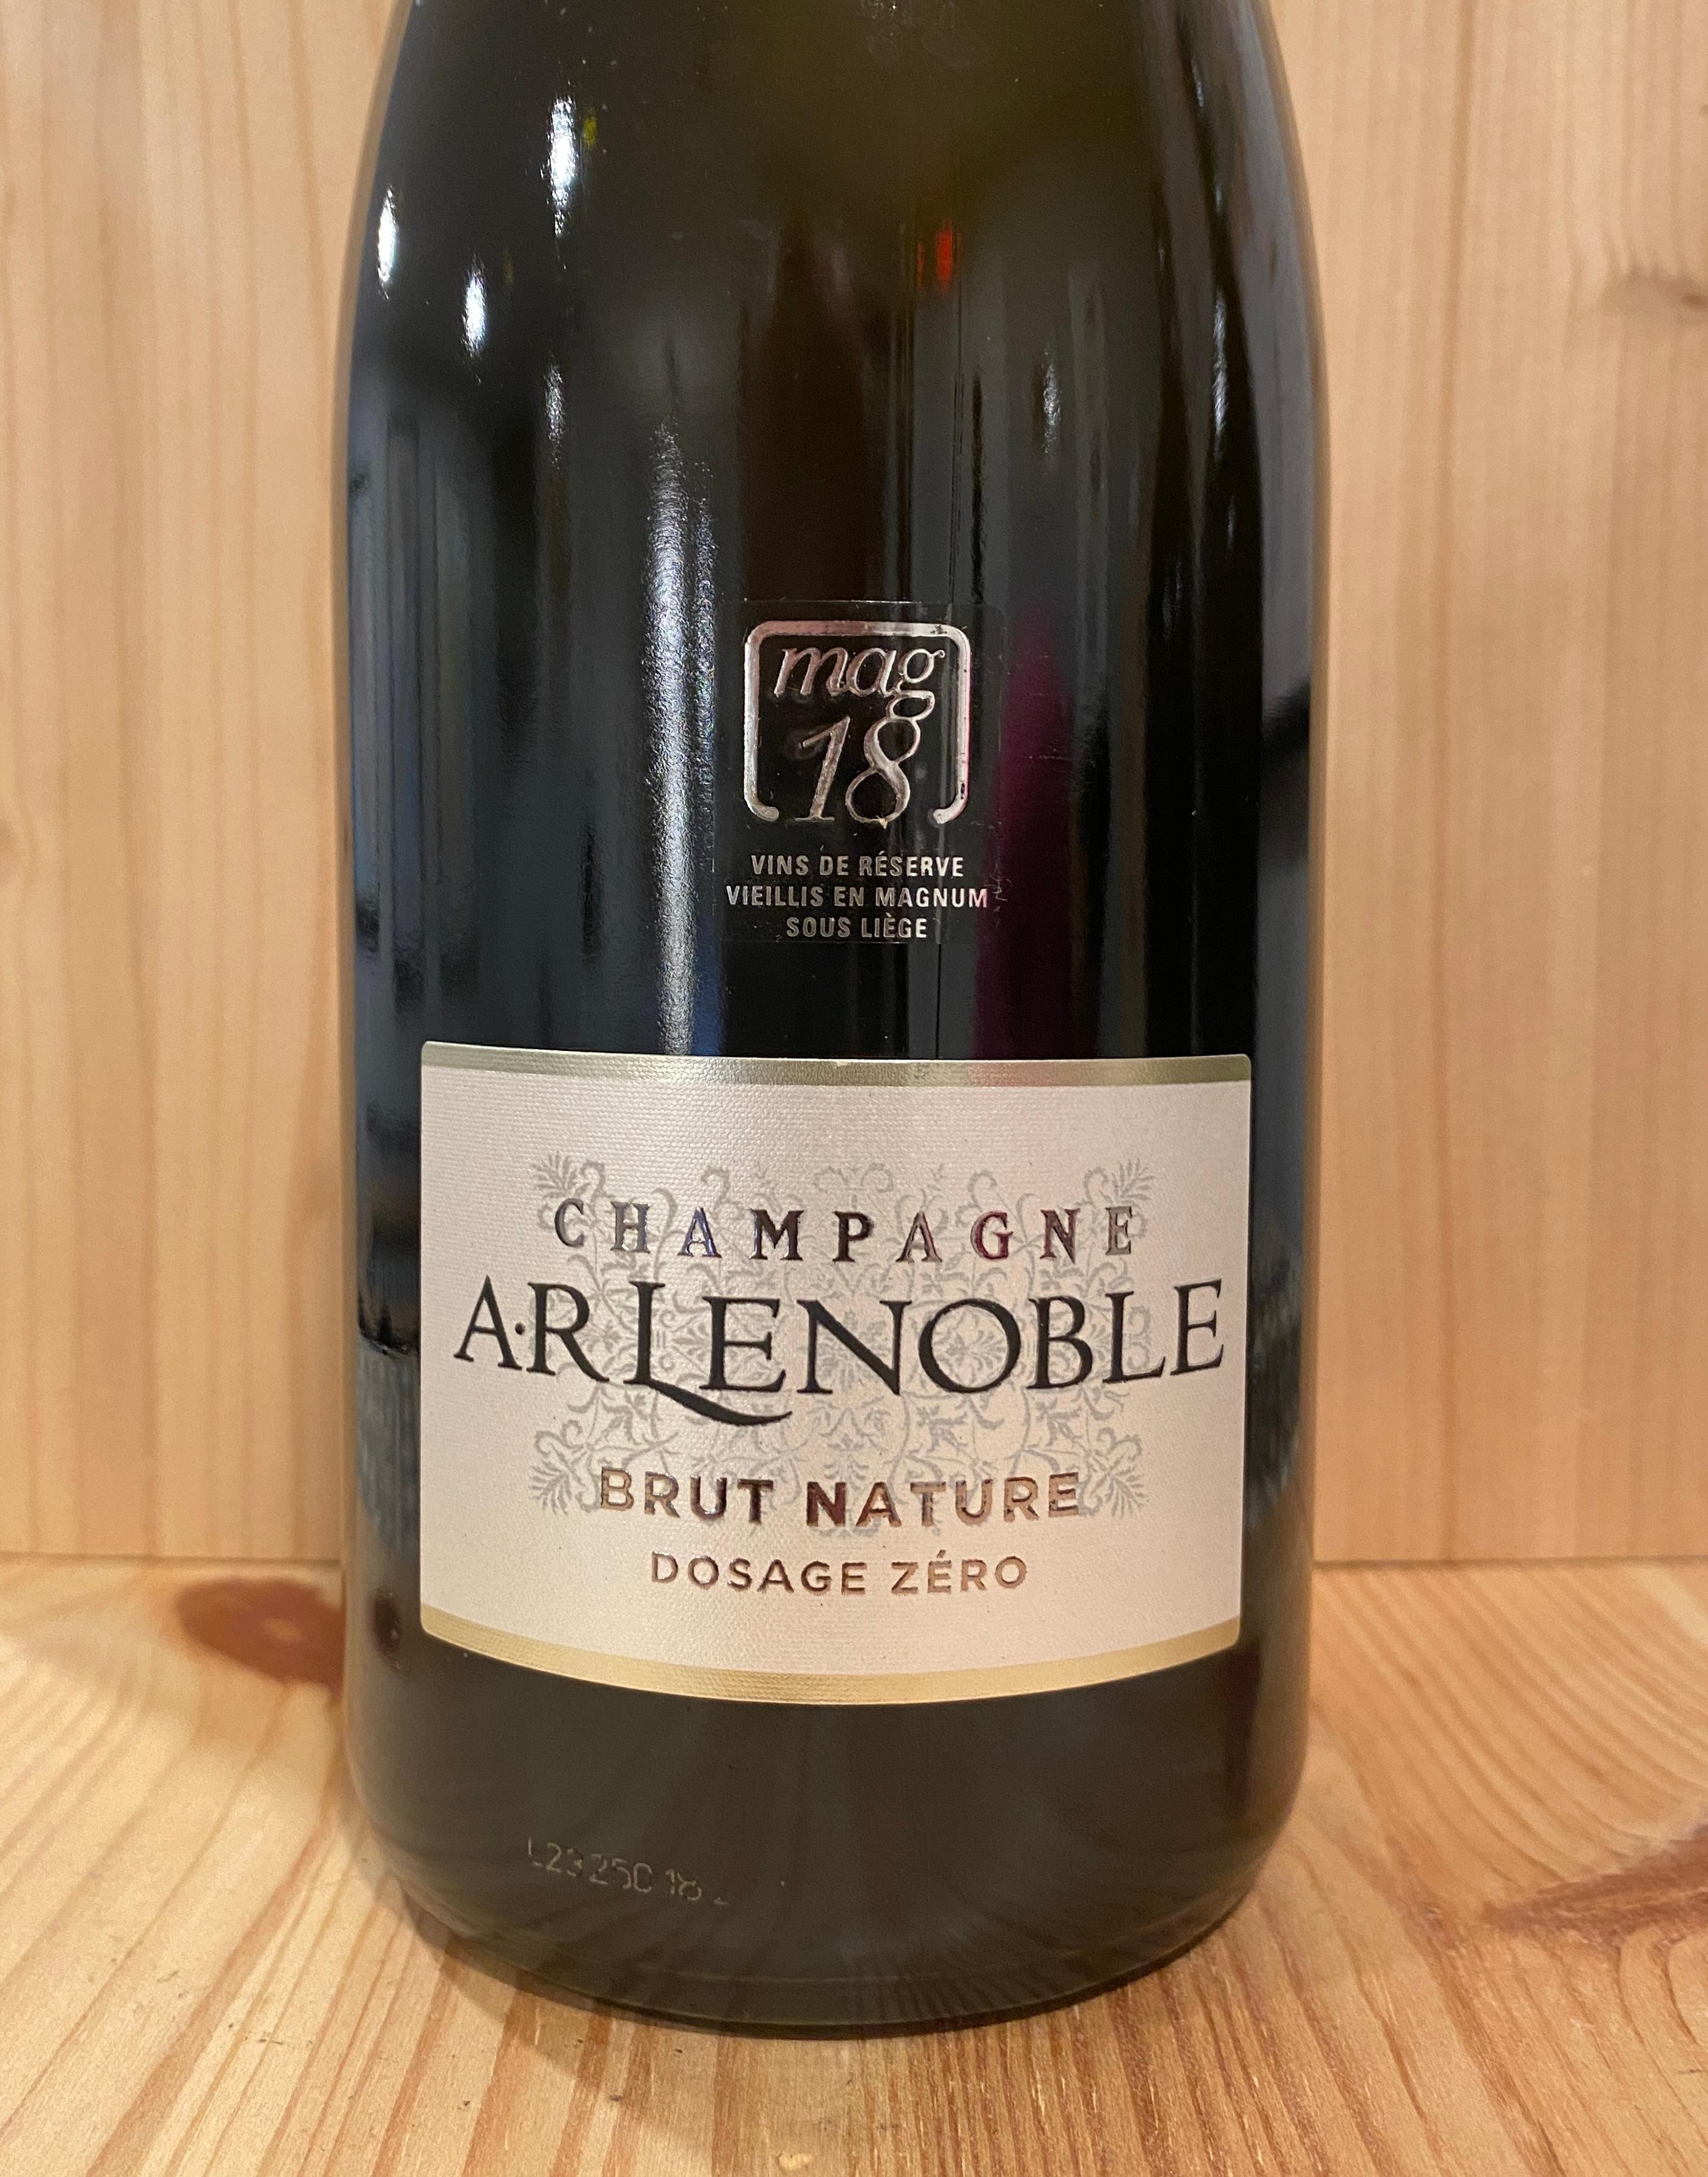 A.R. Lenoble Brut Nature Dosage Zero NV: Champagne, France